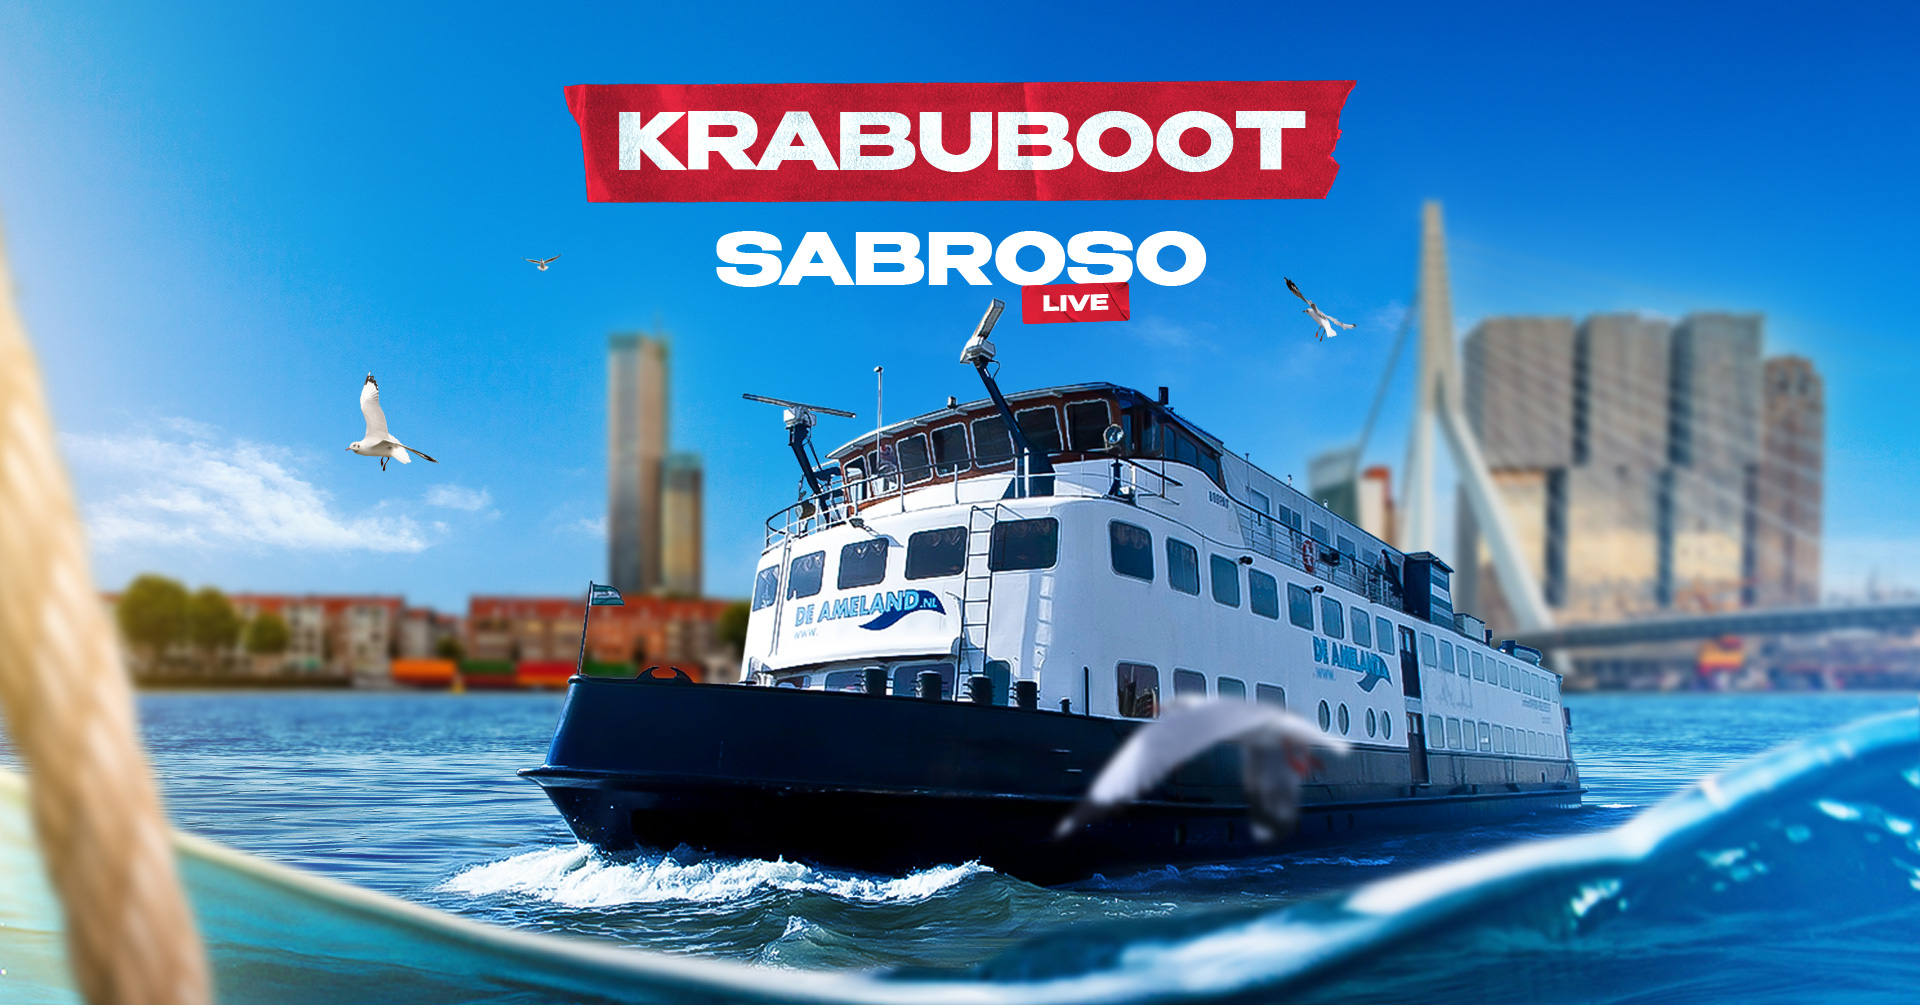 Krabuboot Rotterdam - Sabroso Live header